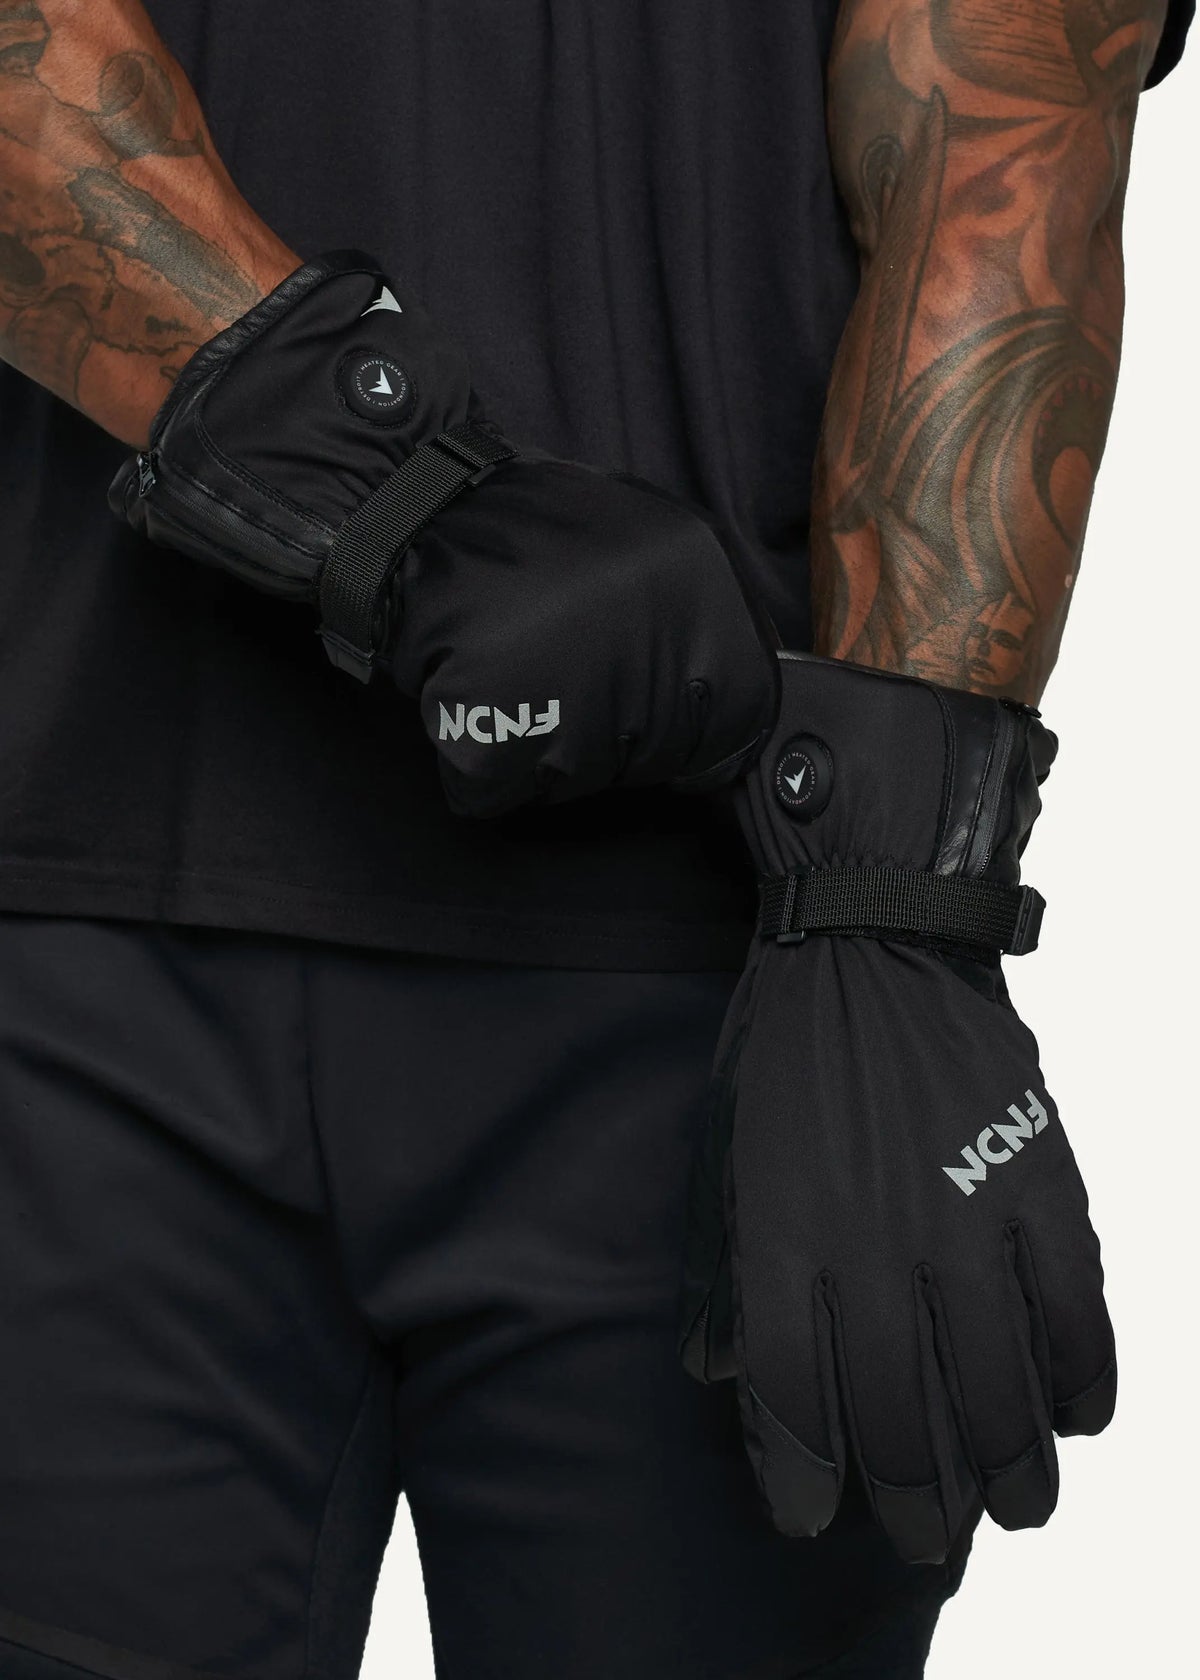 The FNDN G2 SnowPro Gloves FNDN